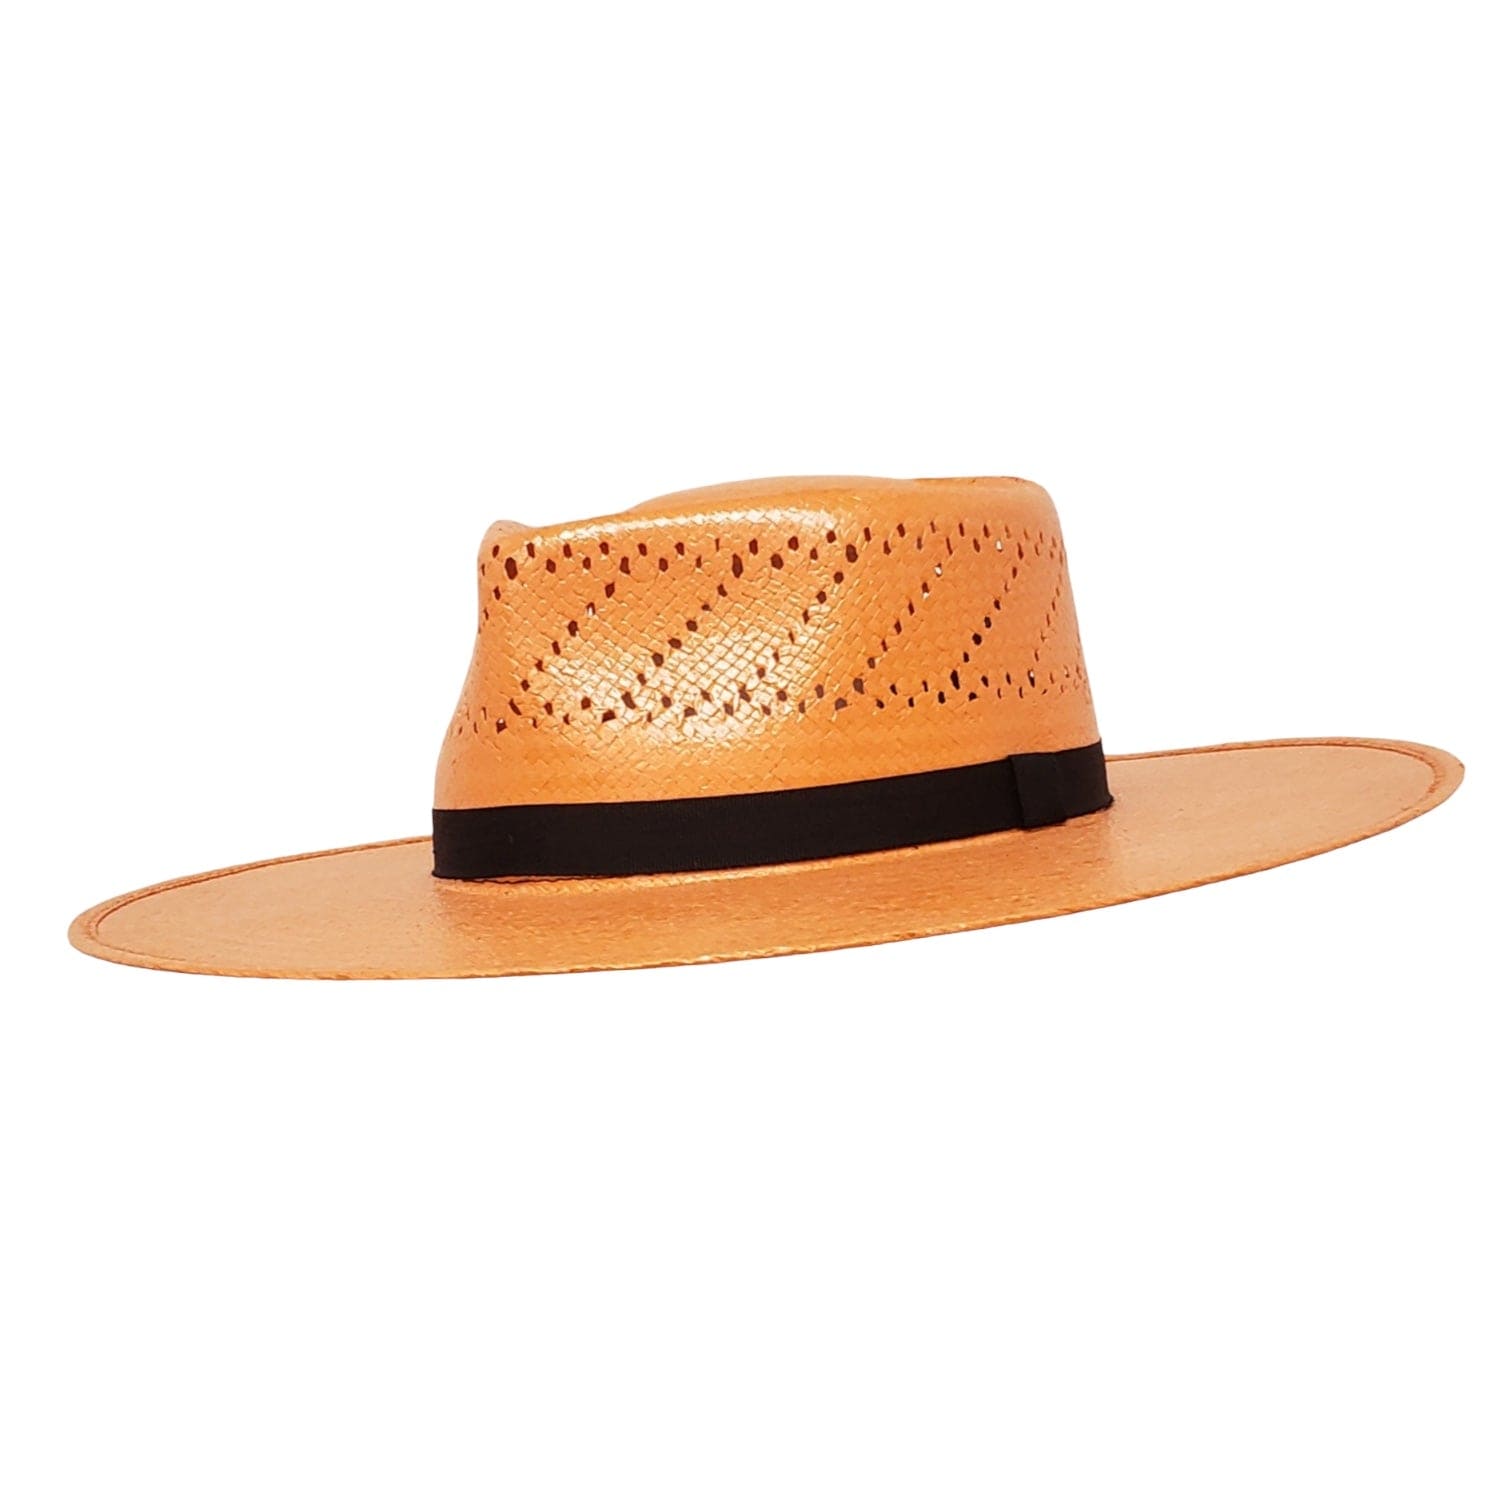 Gone Country Hats Women's Hats Medium  fits 7-1/8 to 7-1/4 Lolita Orange - Straw Shantung